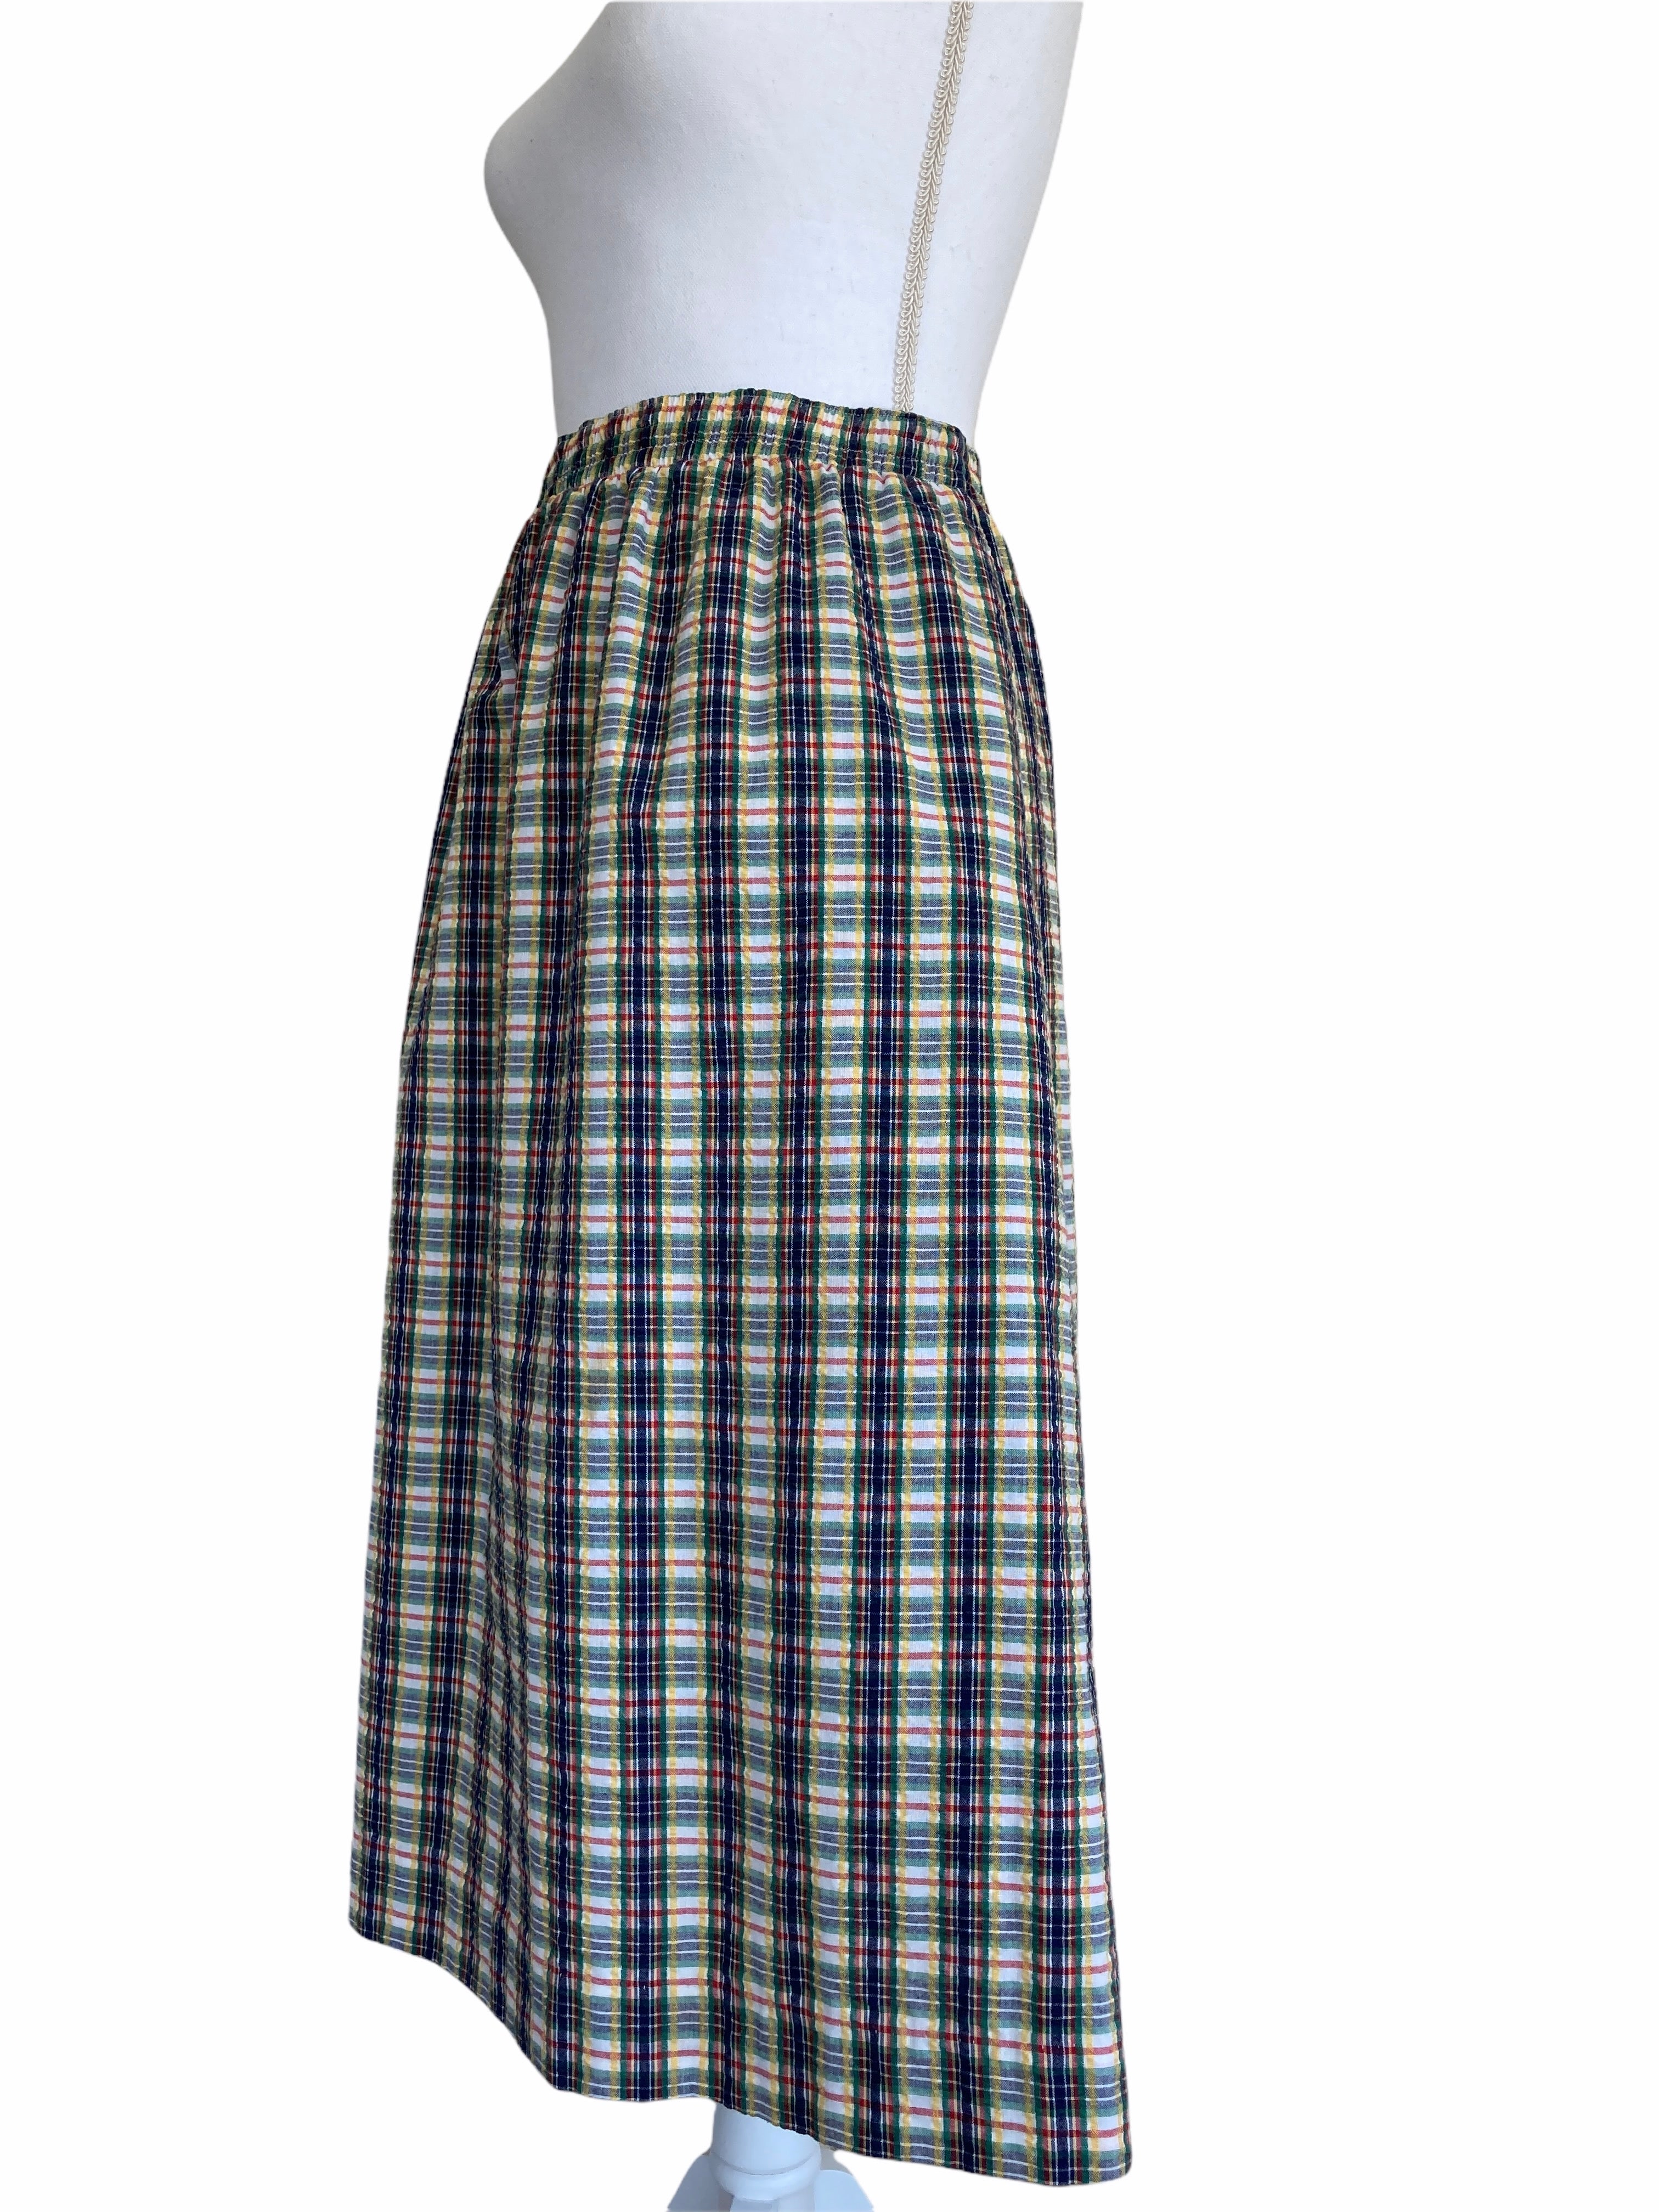 Margaret Smith Vintage Plaid Seersucker Elastic Skirt, M